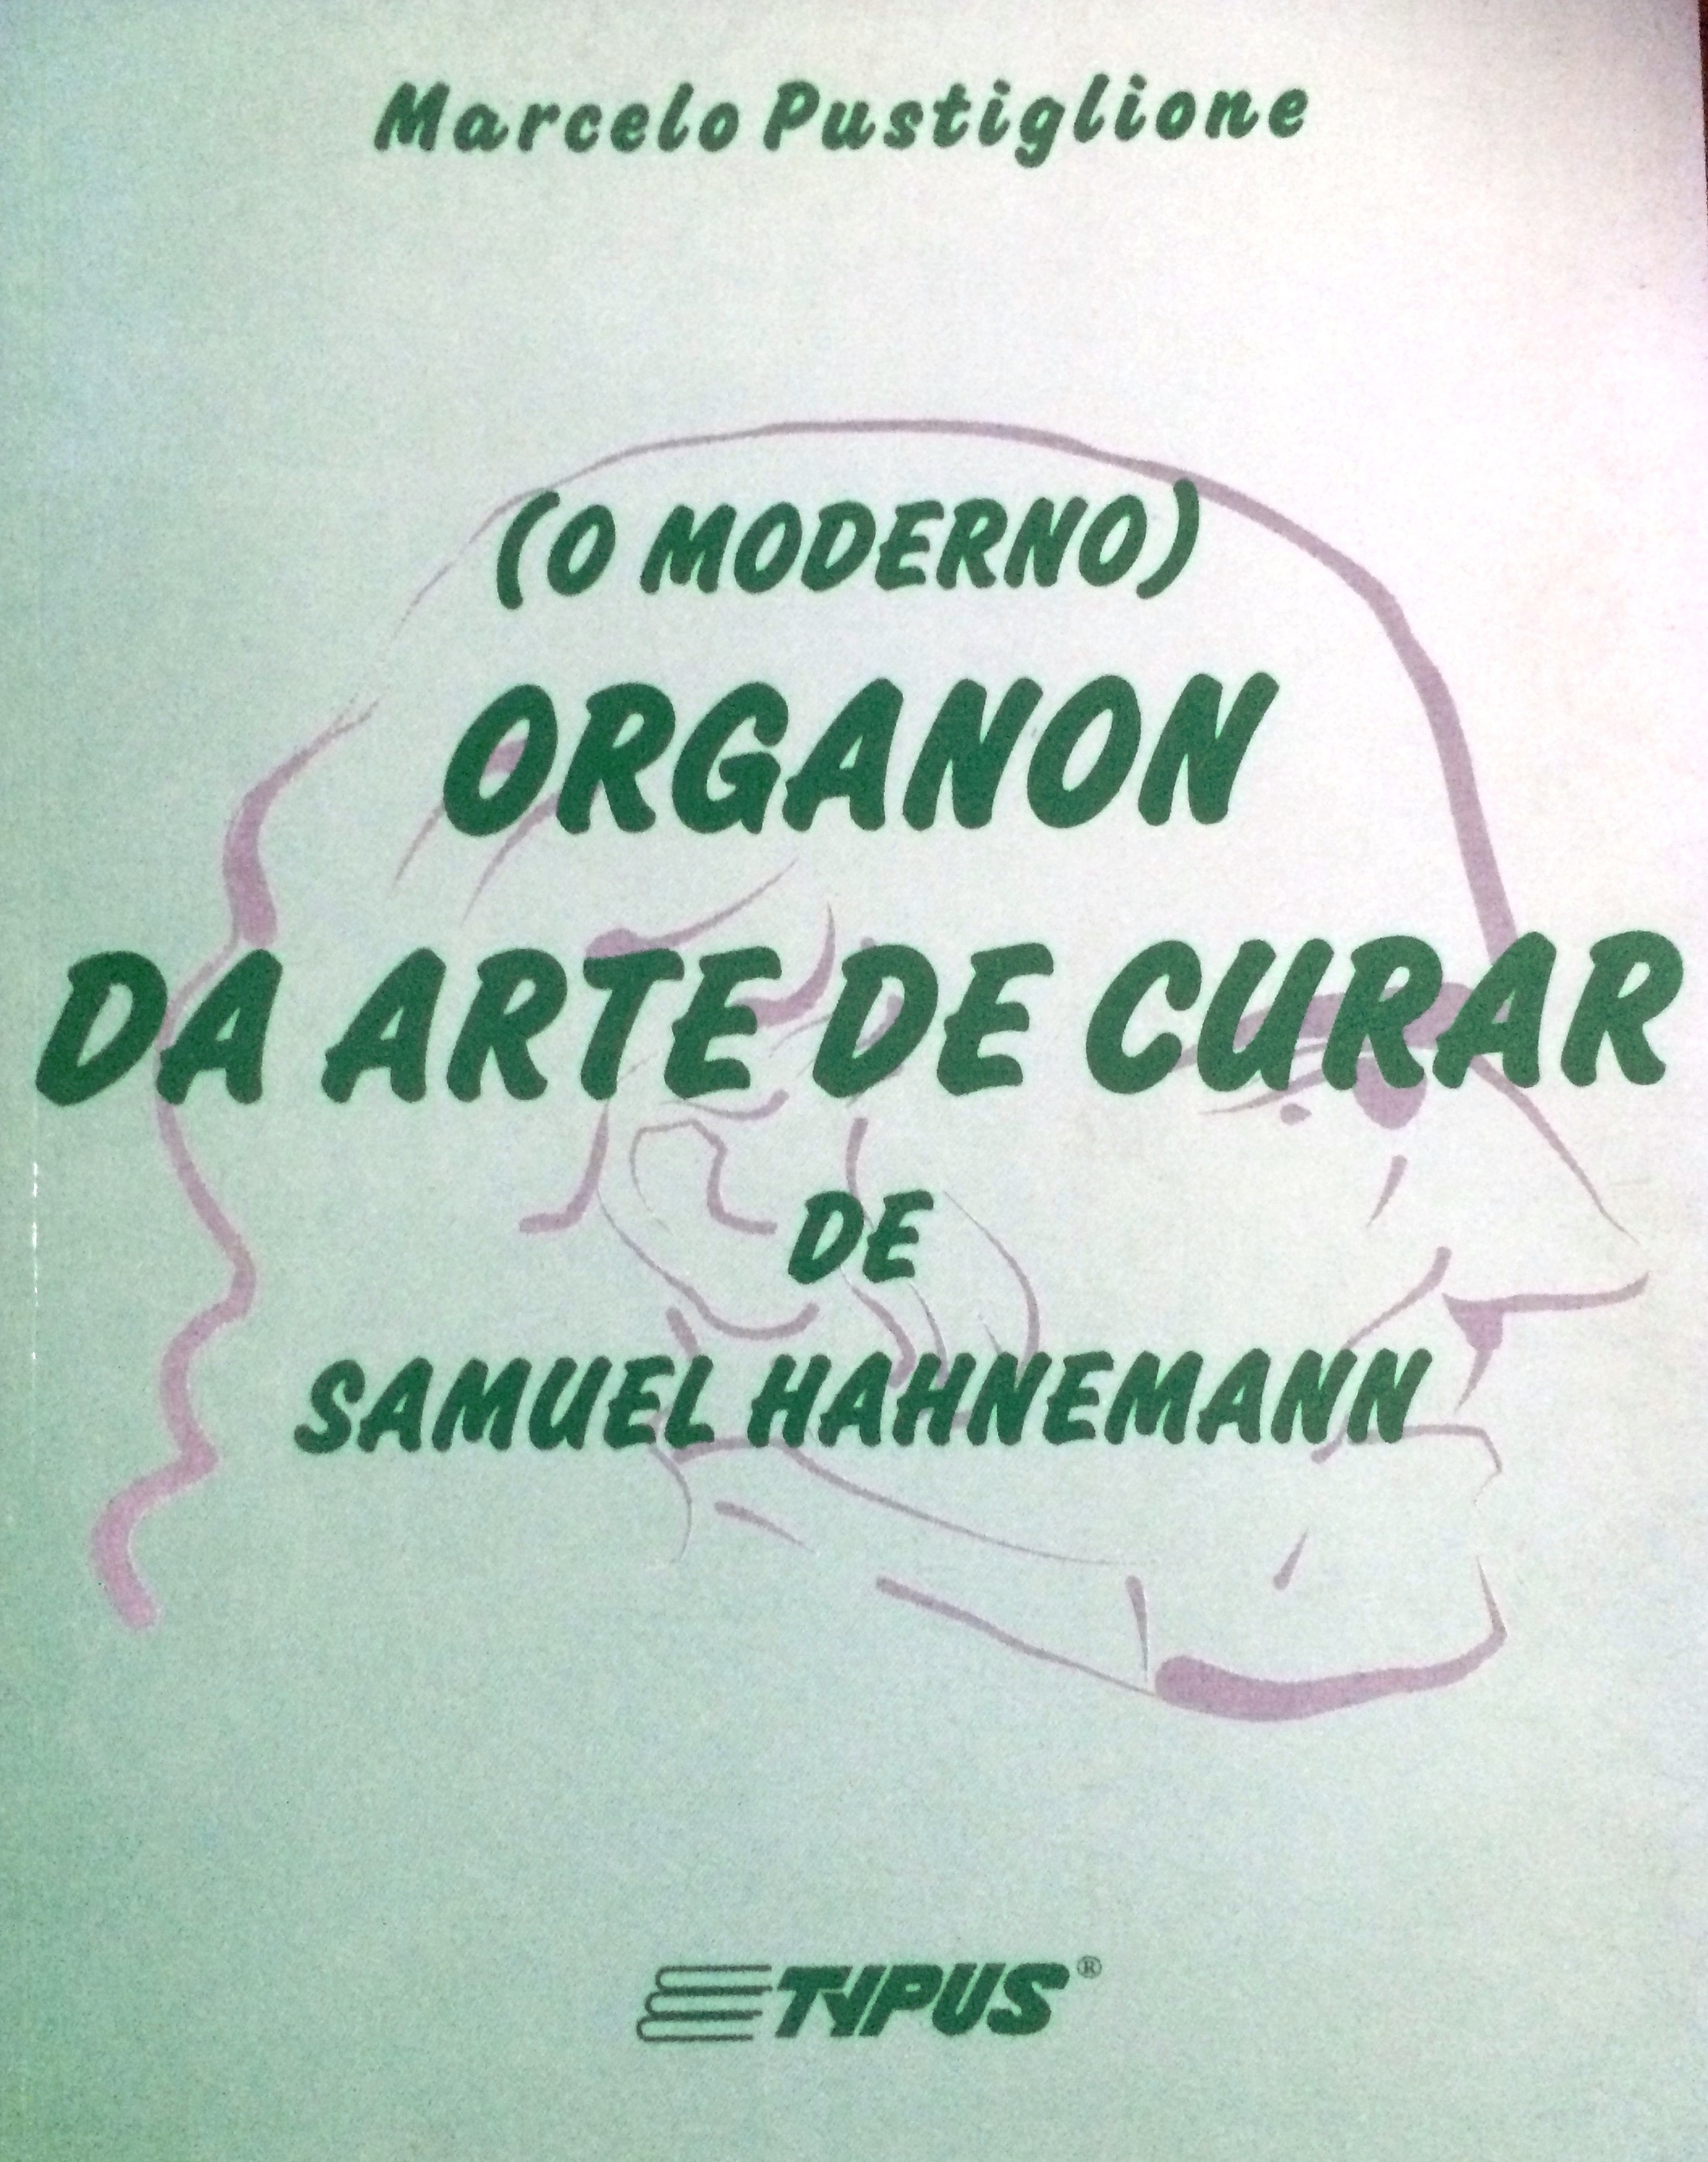 Moderno Organon 1 ed.jpg